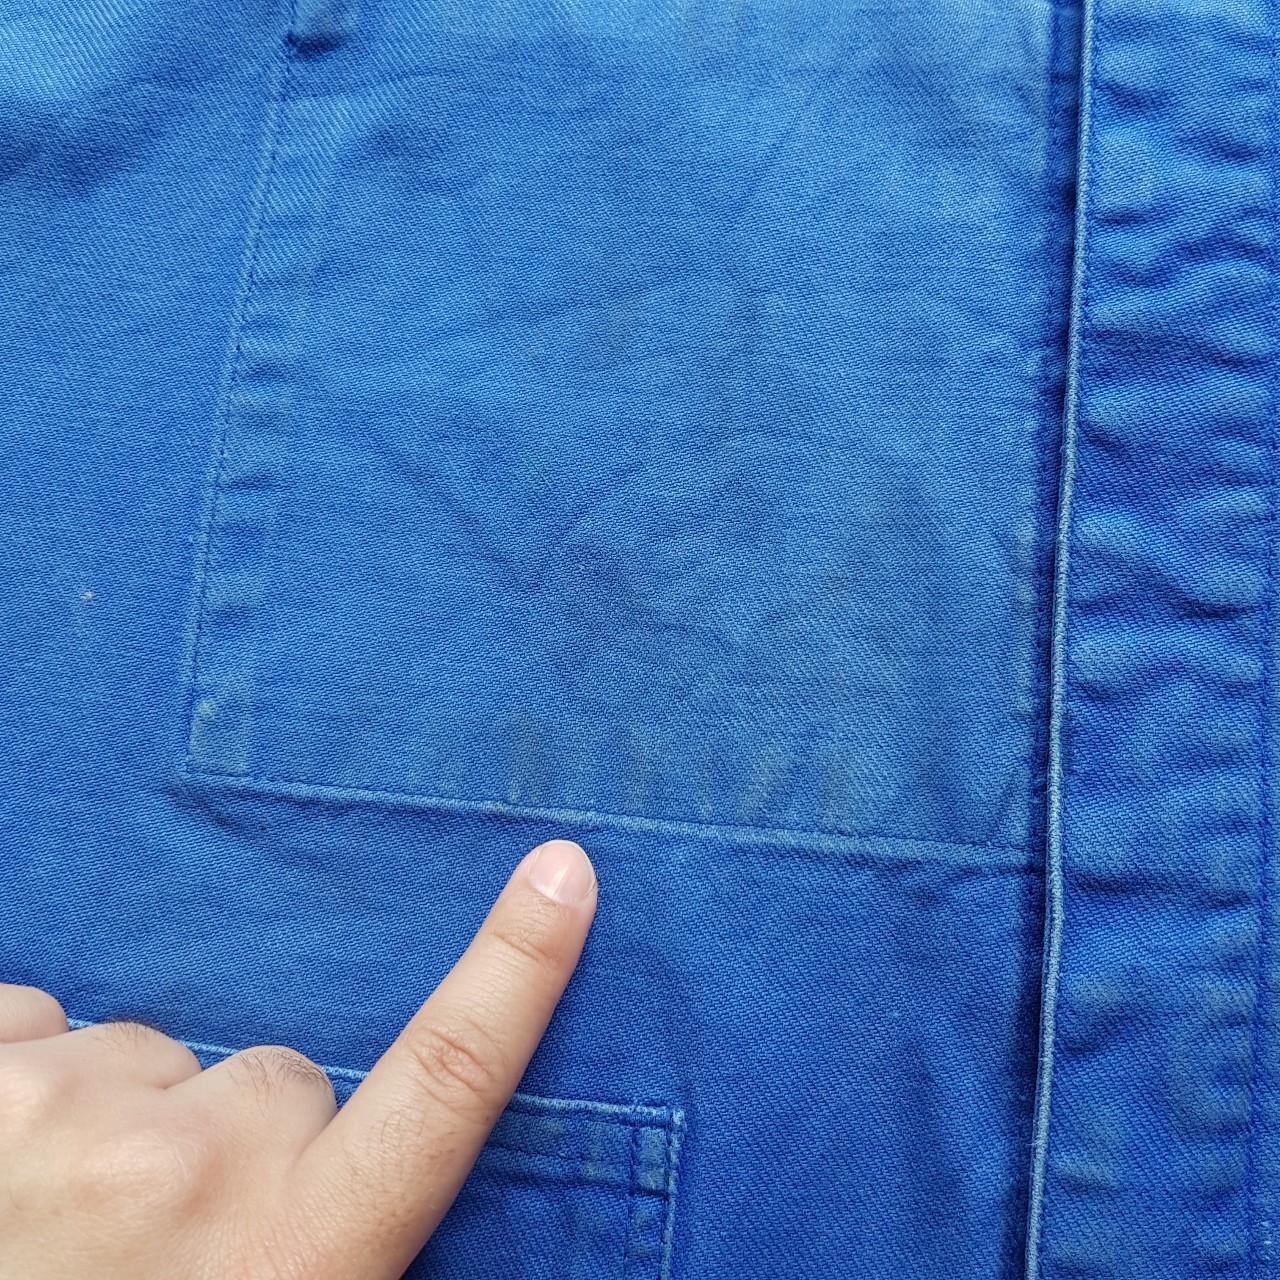 Vintage french royal blue chore work shirt jacket